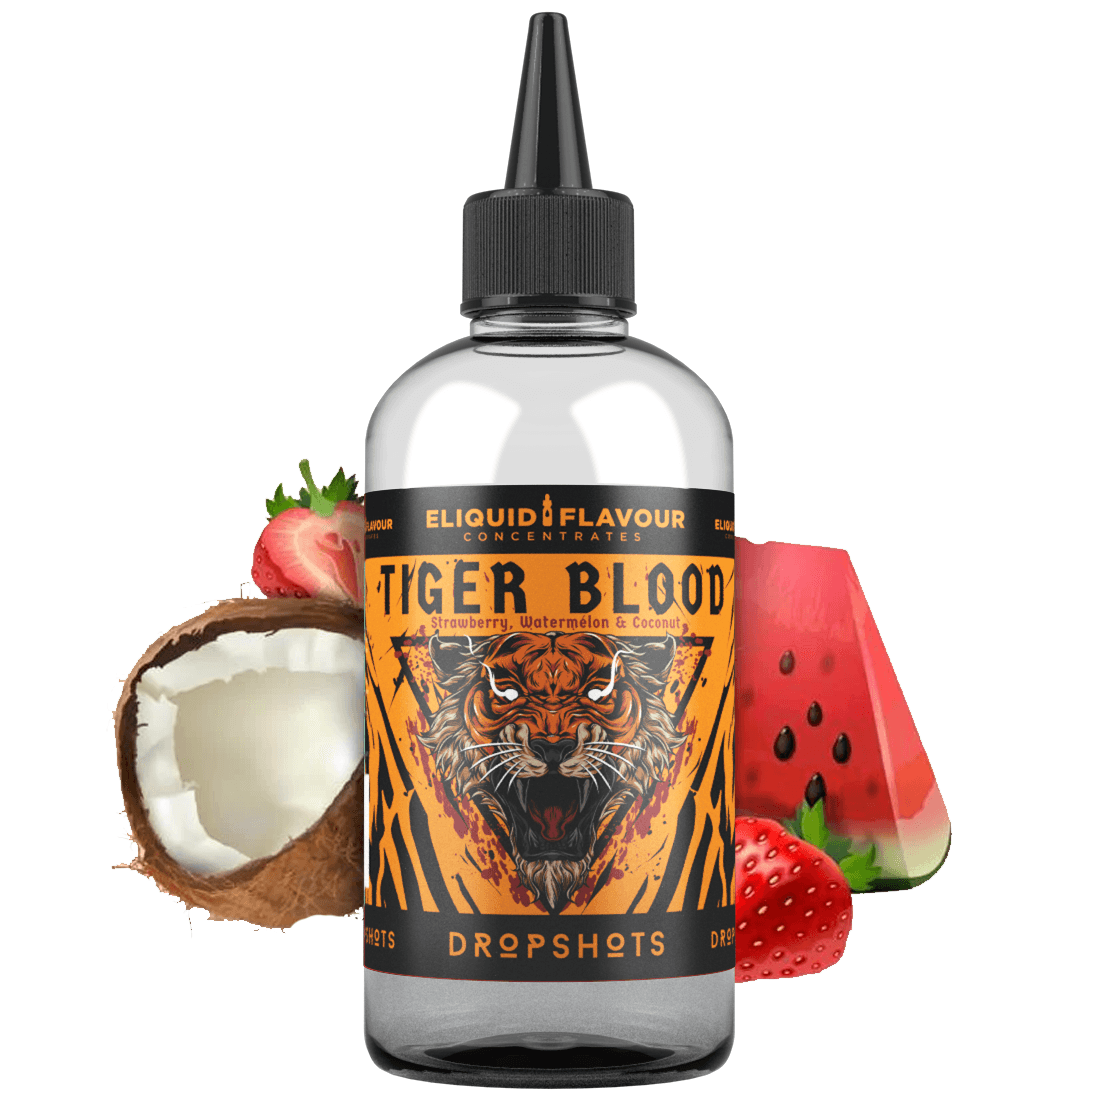 ELFC Dropshots - Tiger Blood 200ml Shortfill